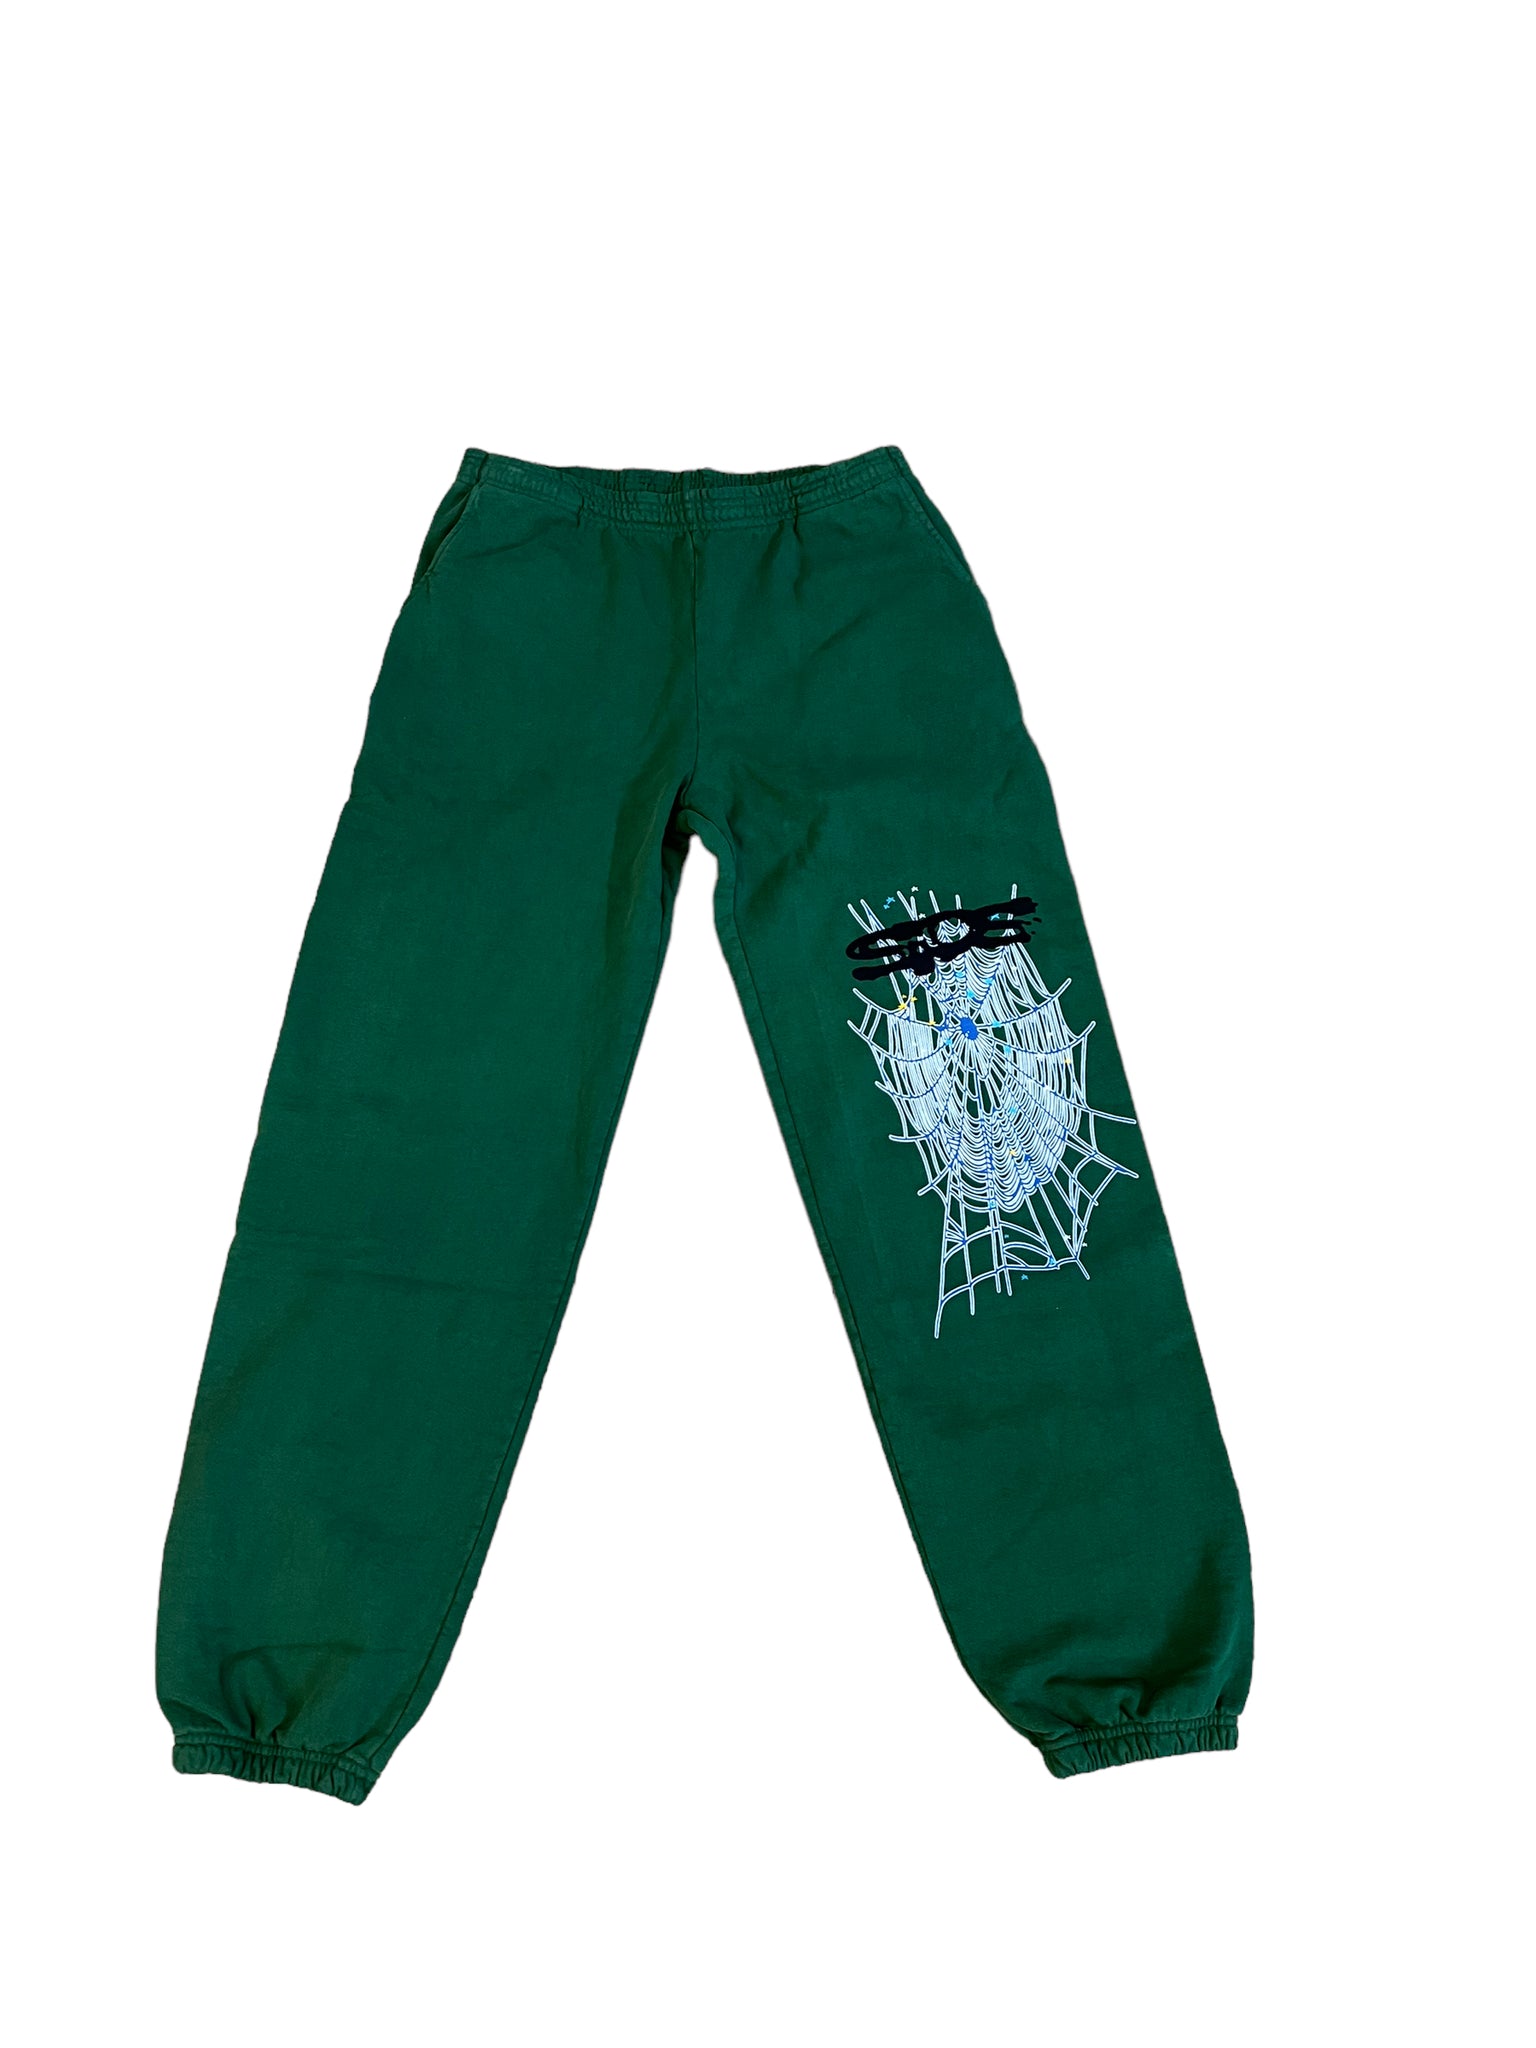 Spider Hunter Sweatpants "Green"